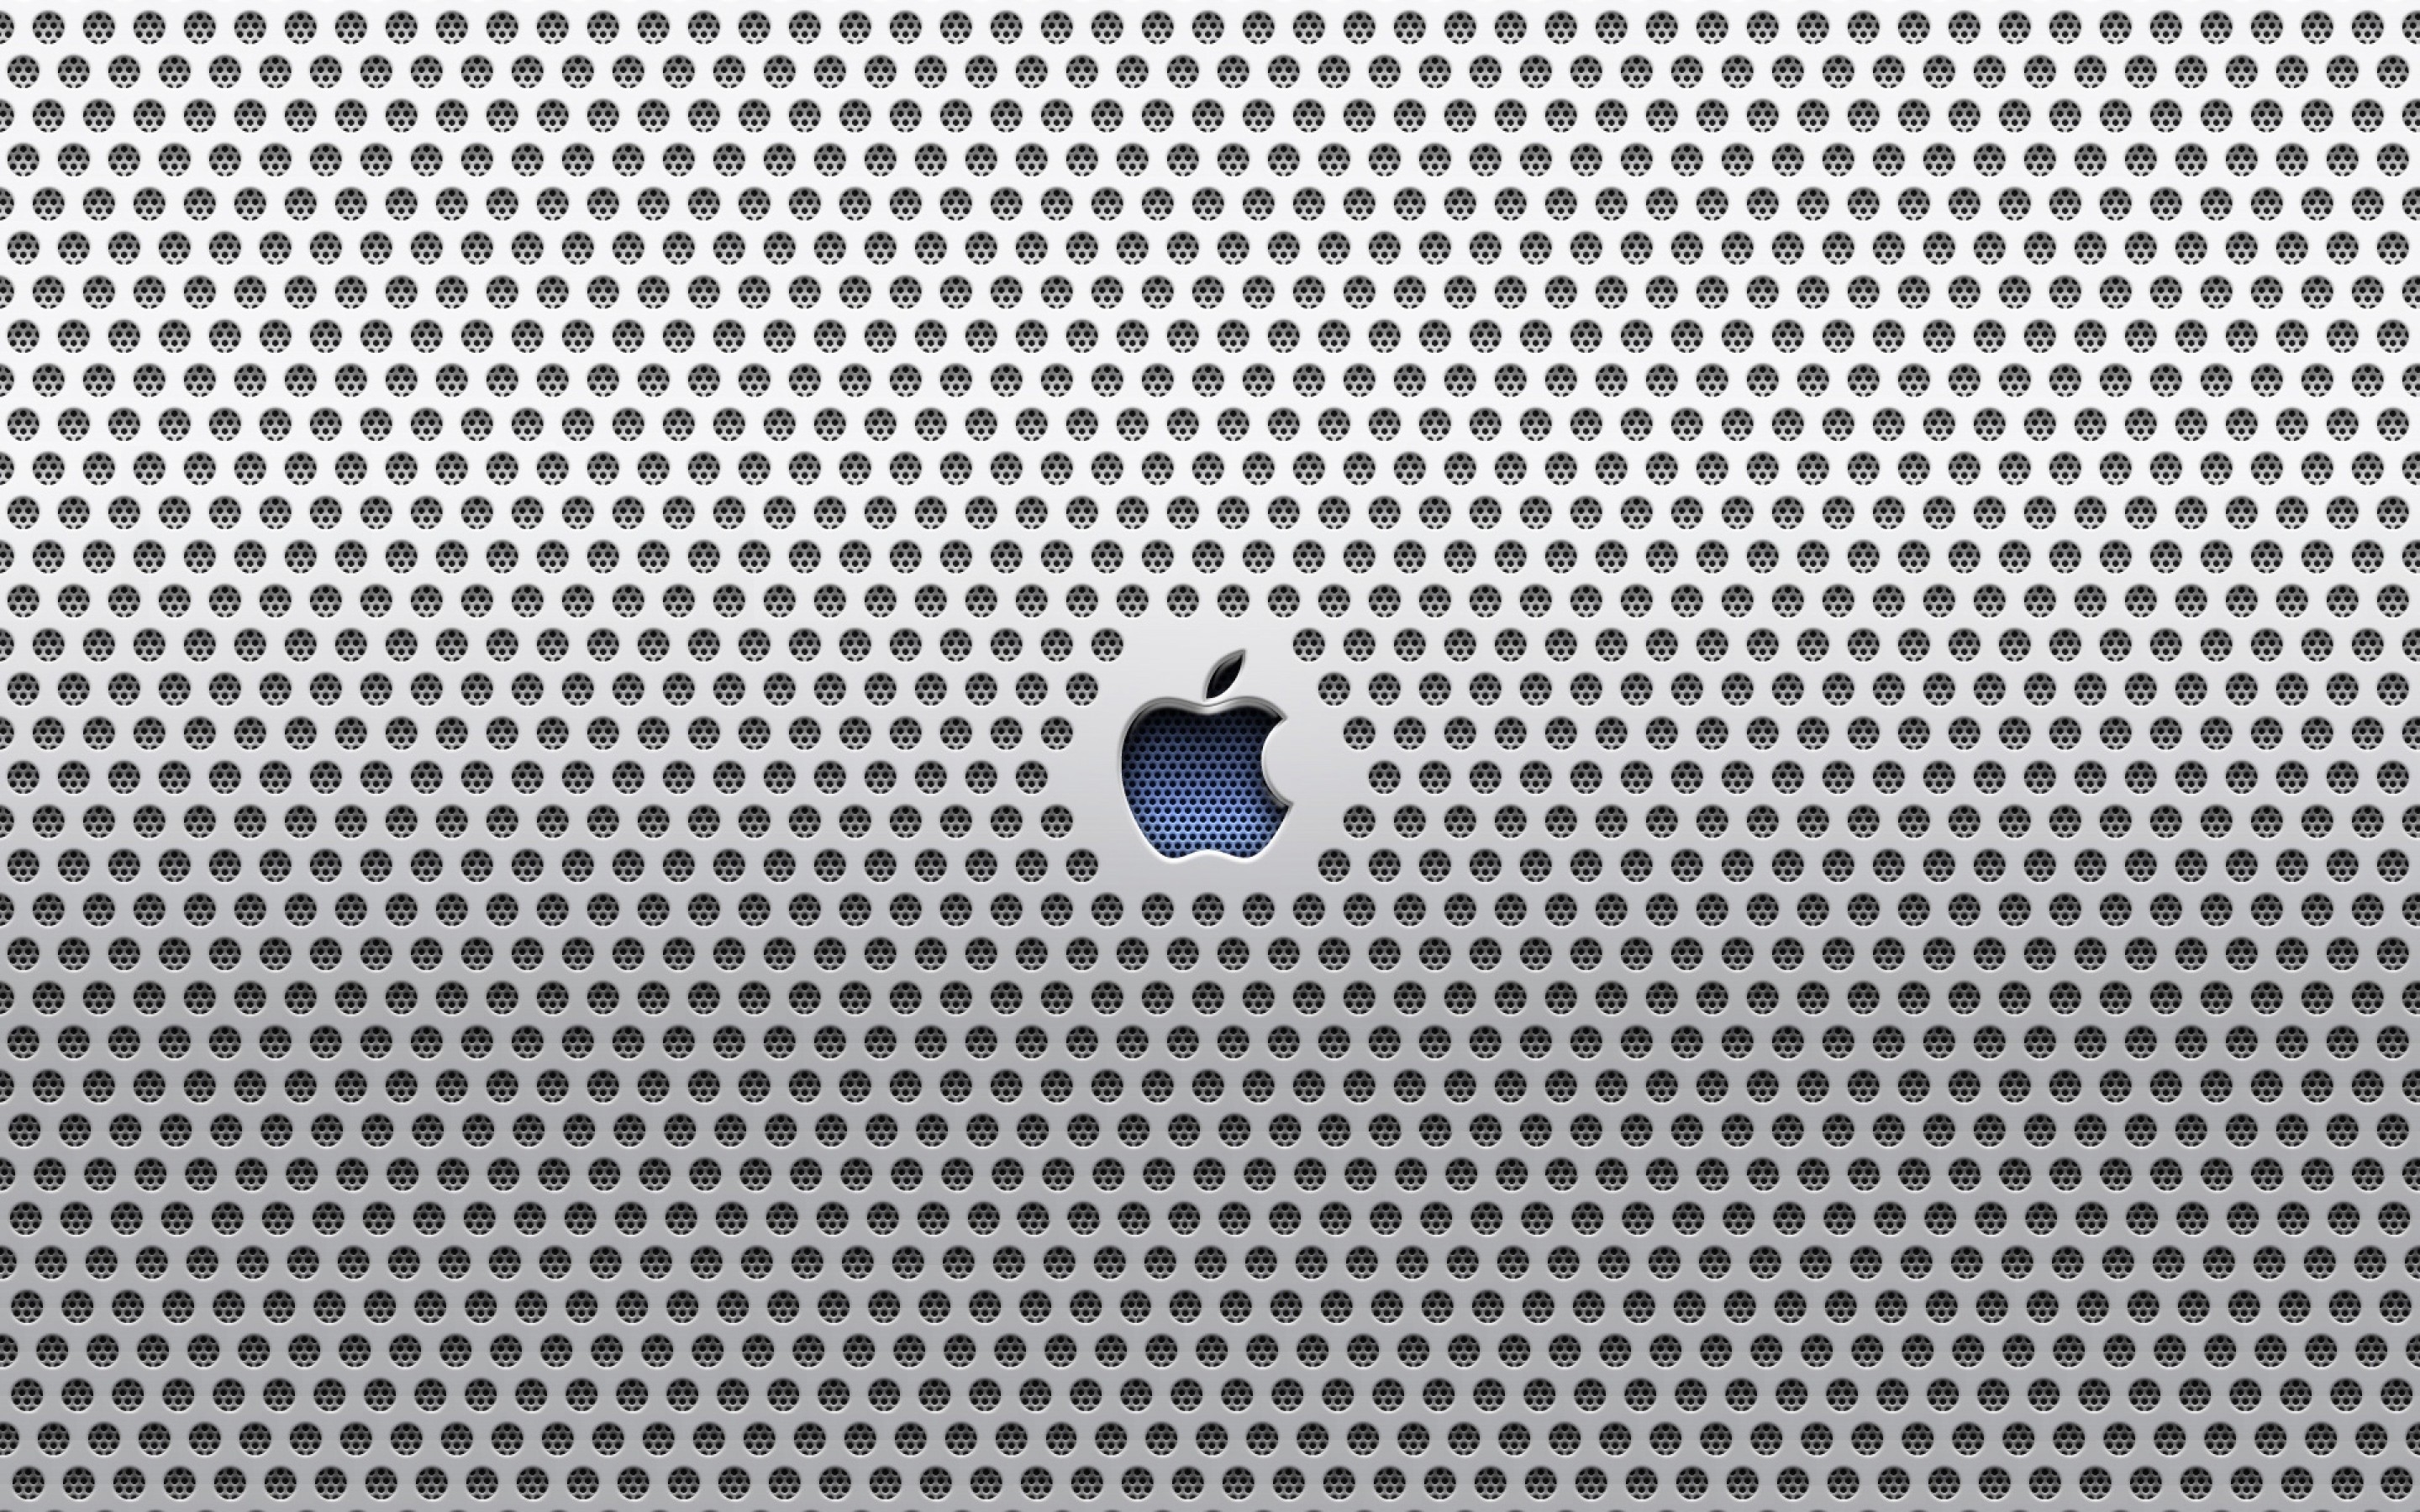 Apple Metal HD Mac Wallpaper For Macbook Pro